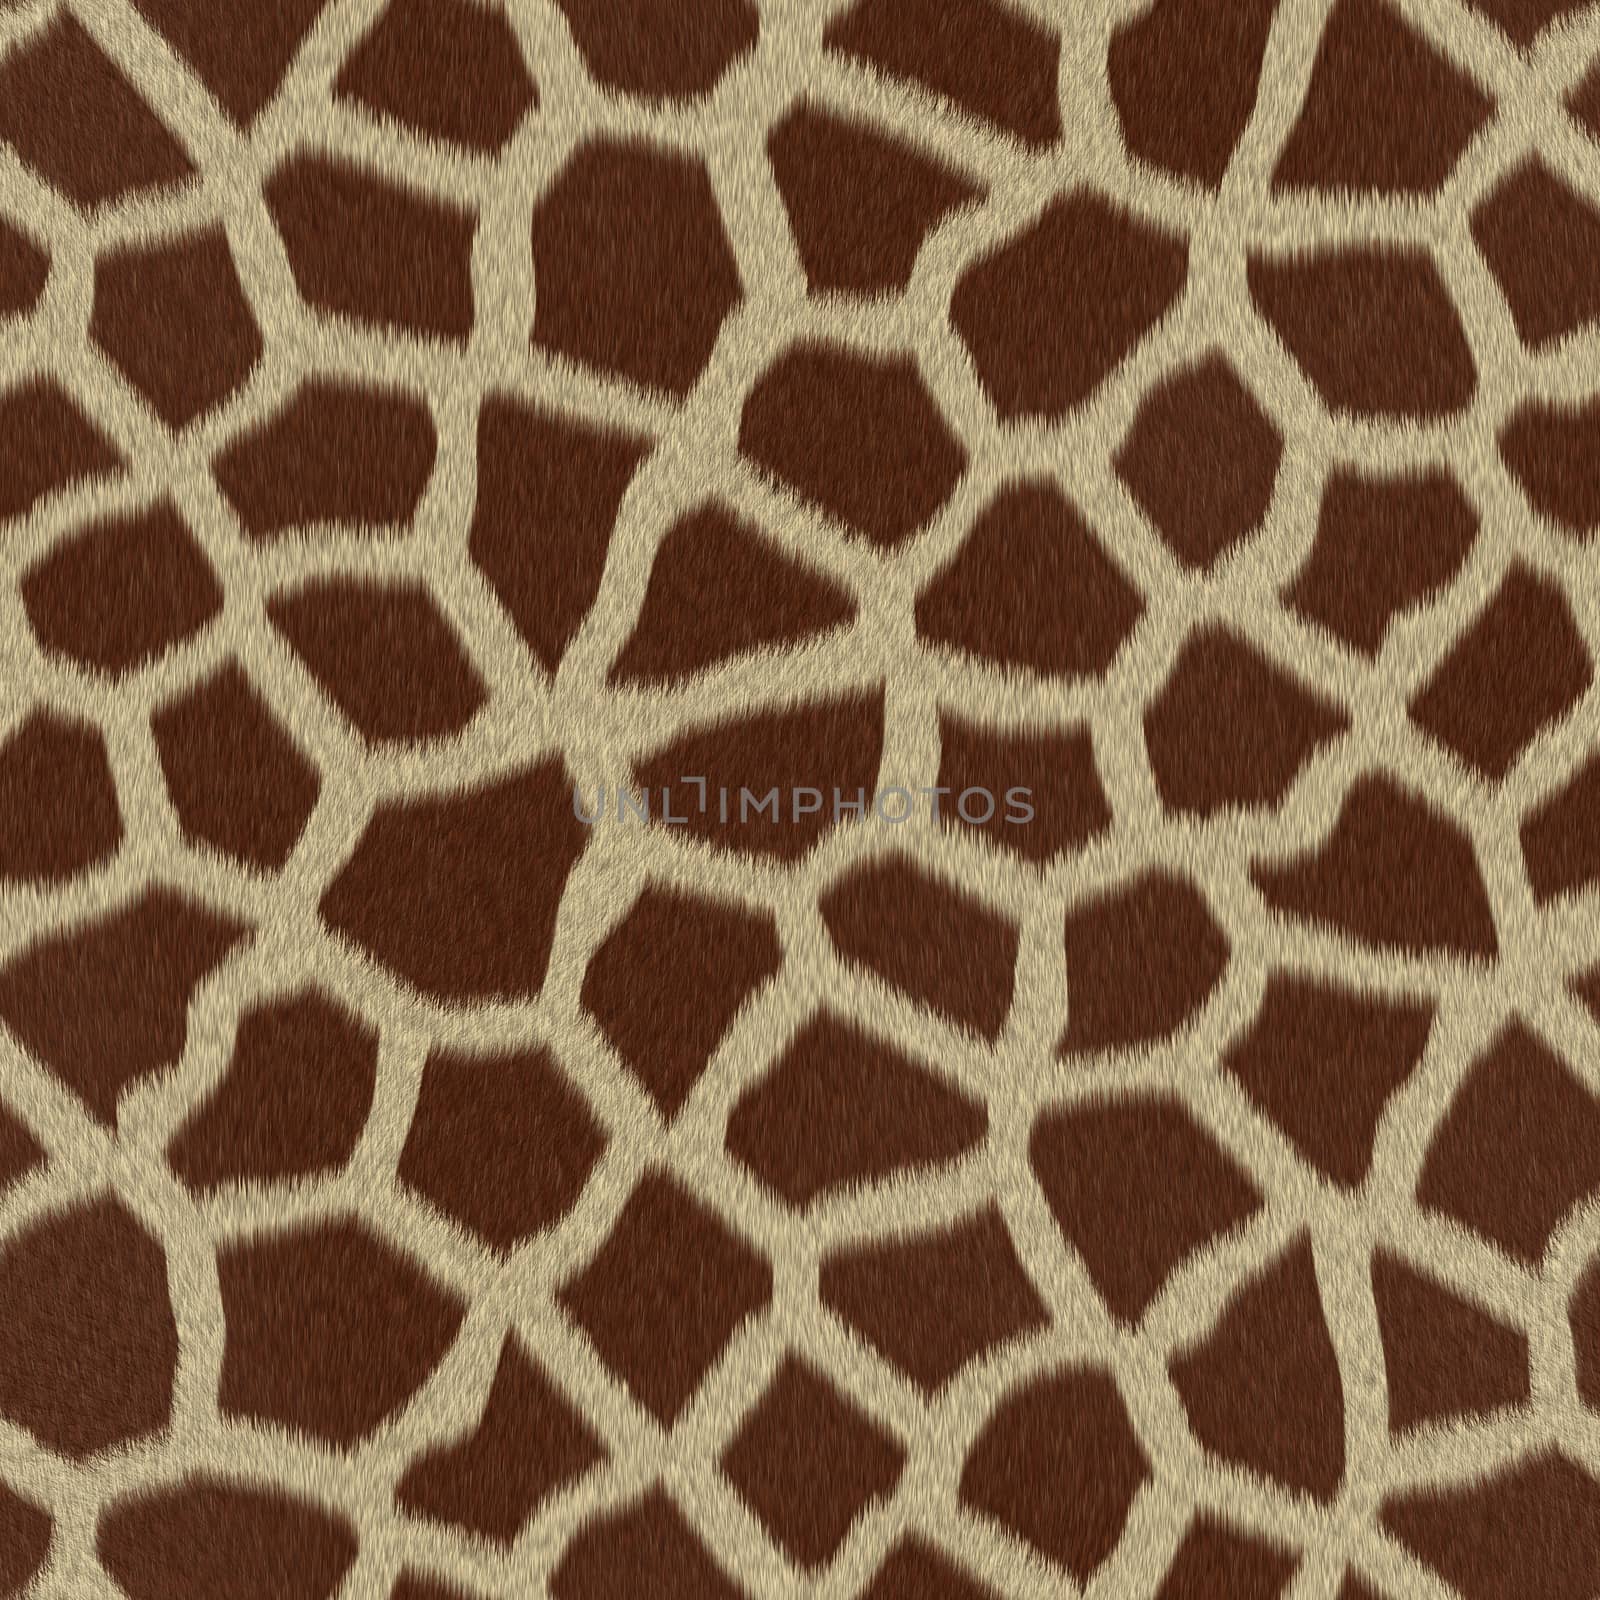 Giraffe fur (skin) background or texture